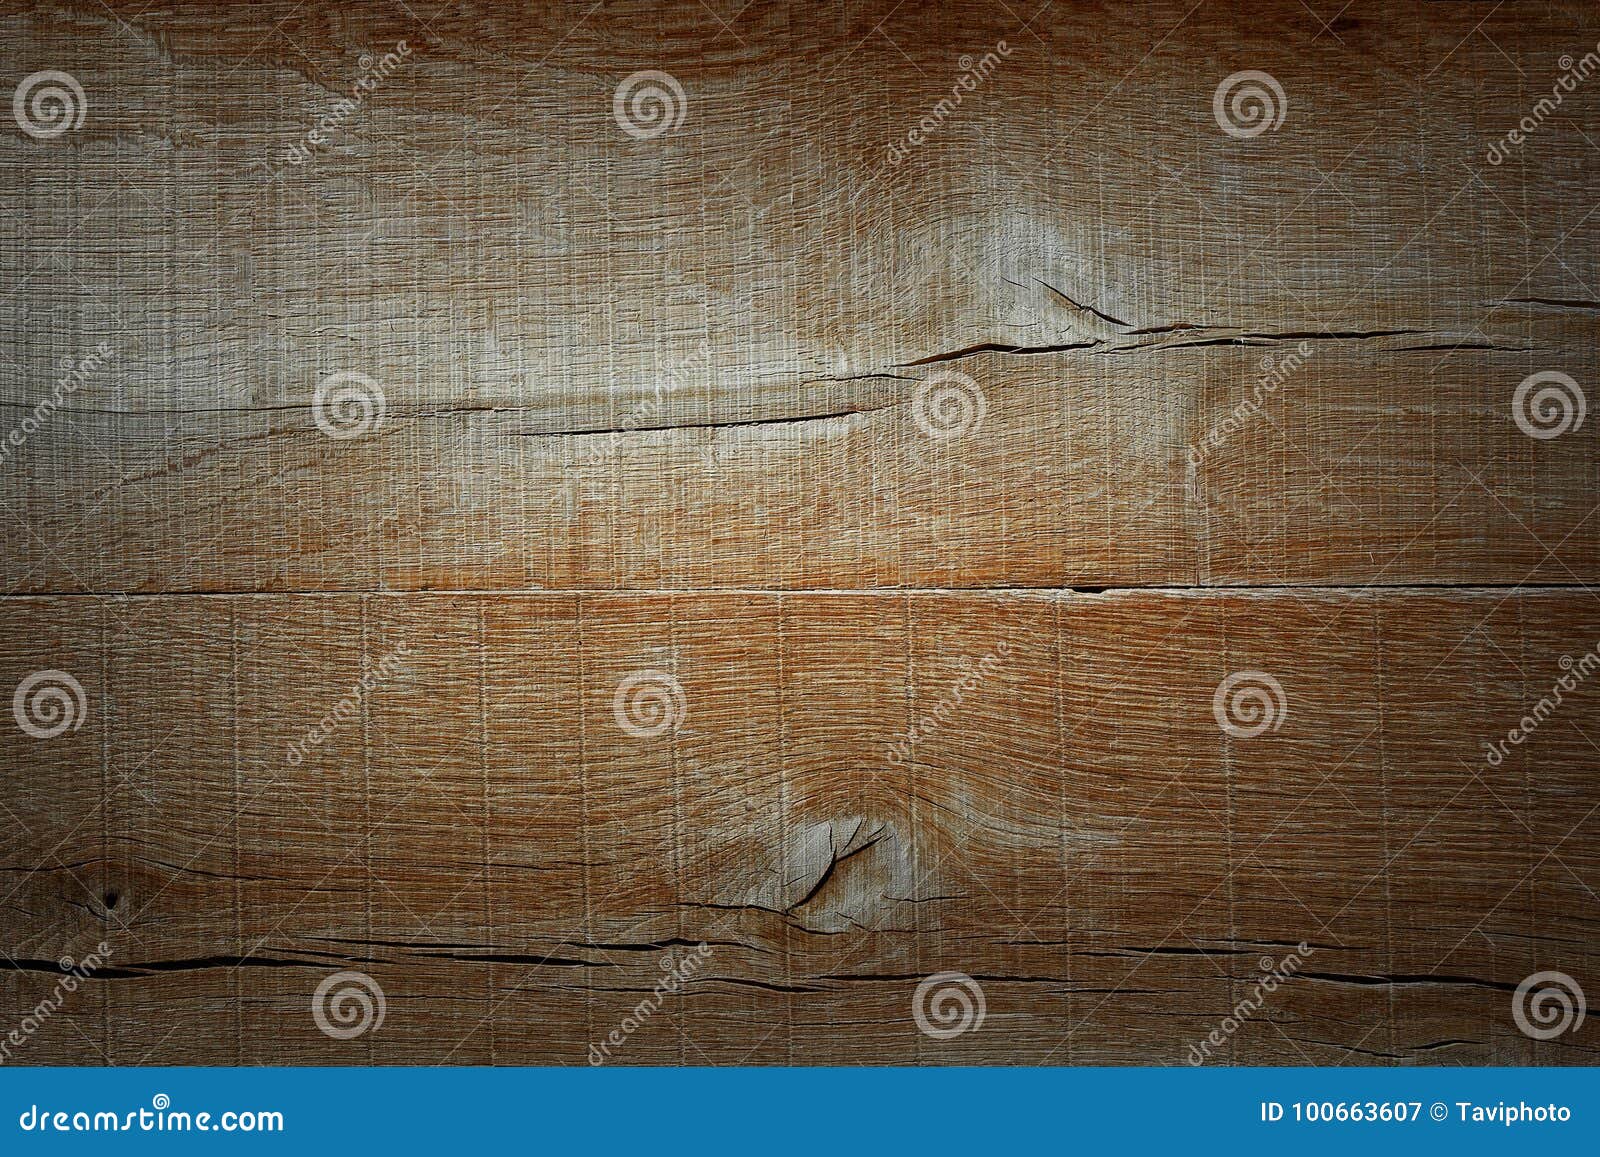 Detailed Oak Wood Plank Texture Stock Image Image Of Nature